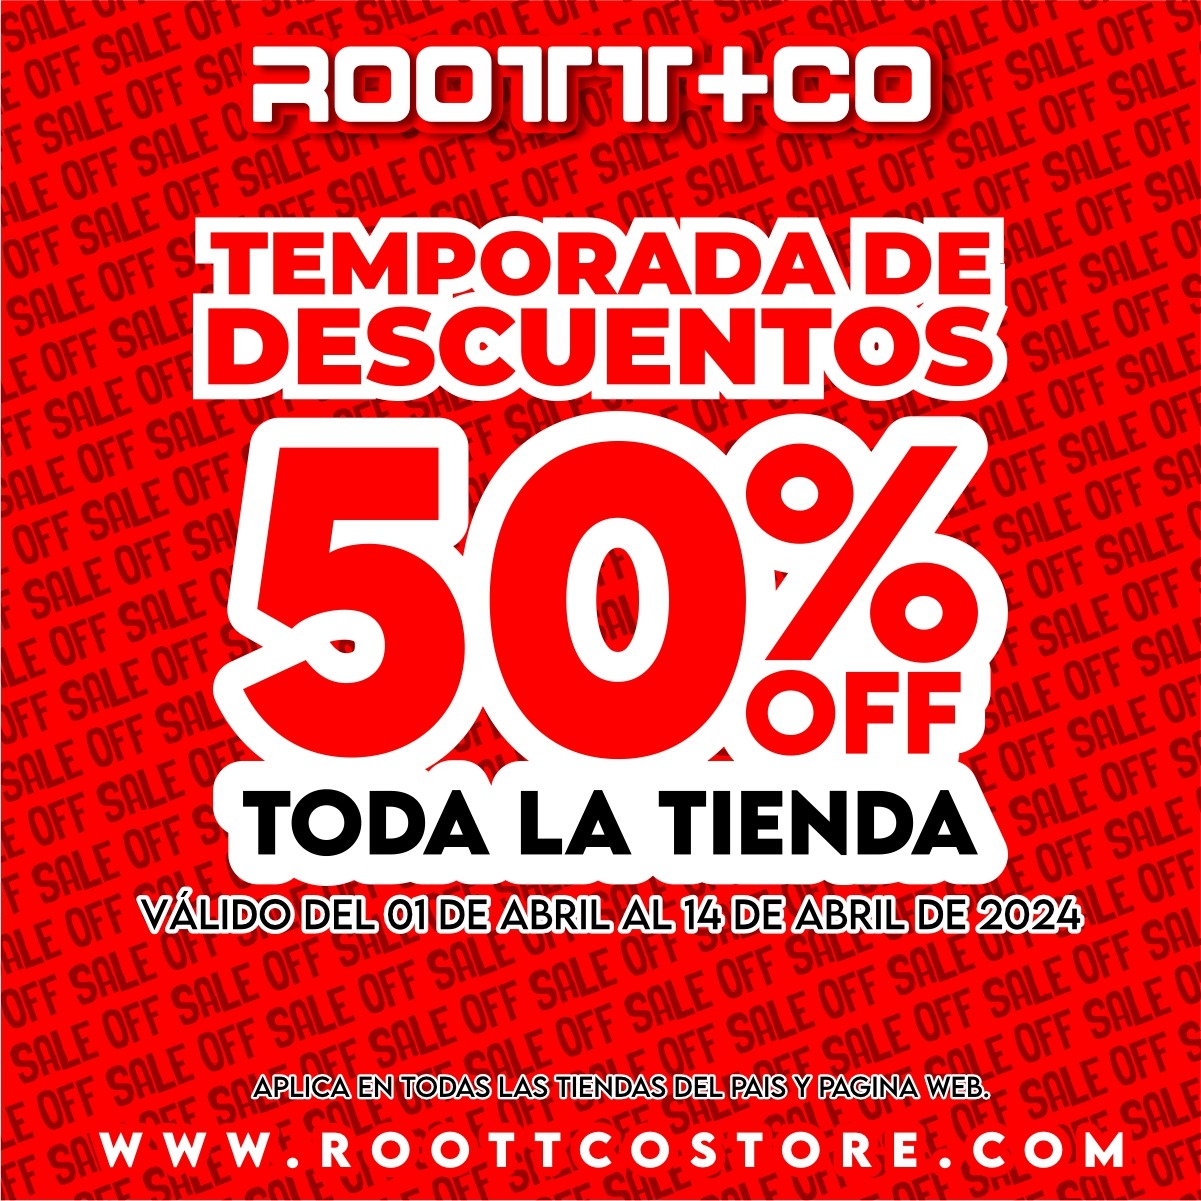 Roott+Co